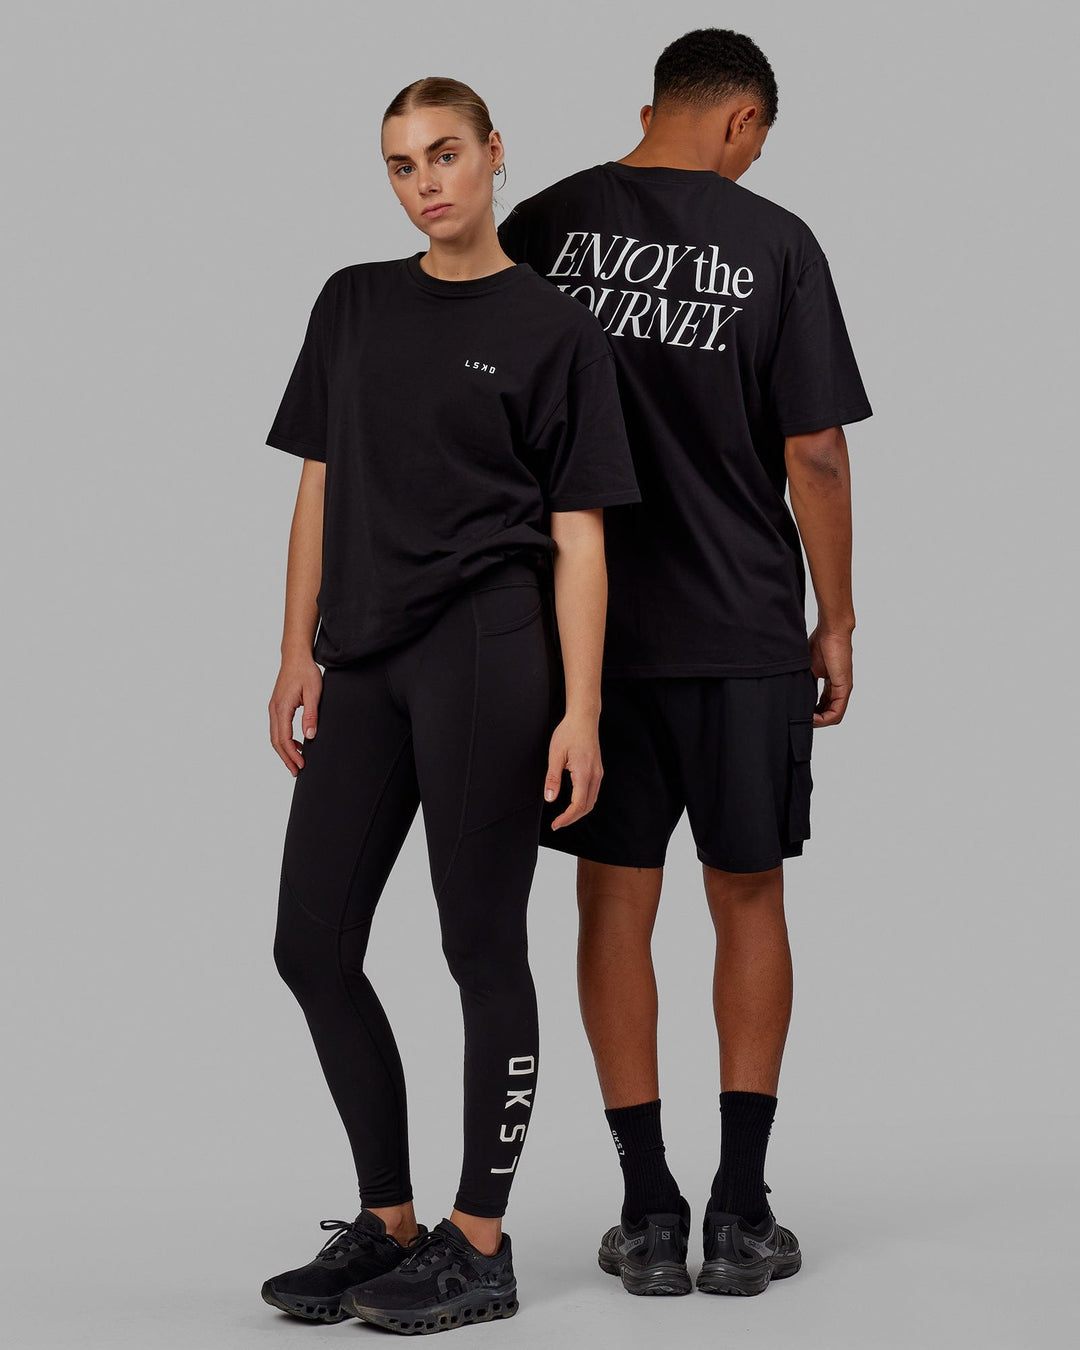 Duo wearing VS1 FLXCotton Tee Oversize - Black-White